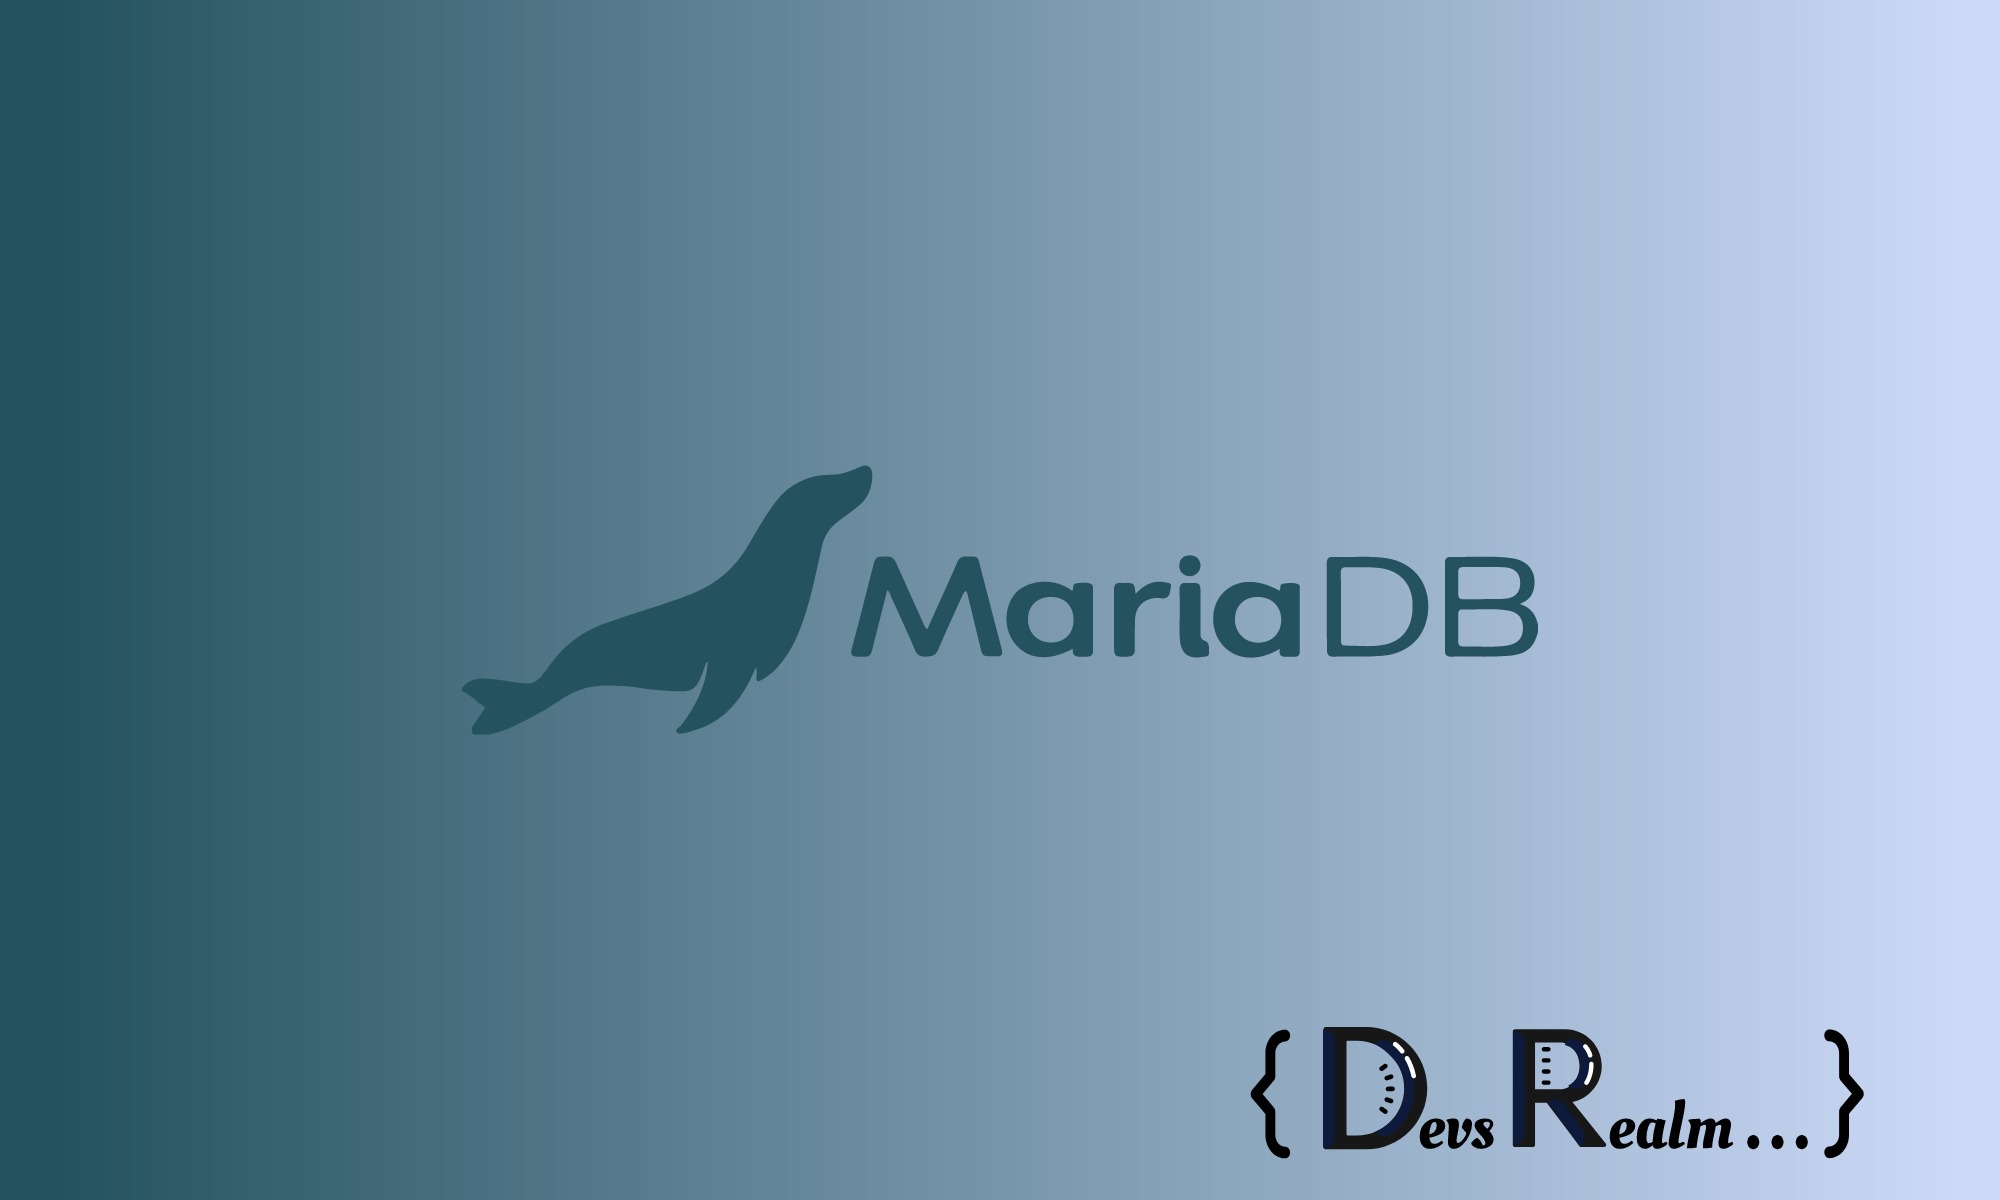 Managing MariaDB Databases (Ubuntu Server)